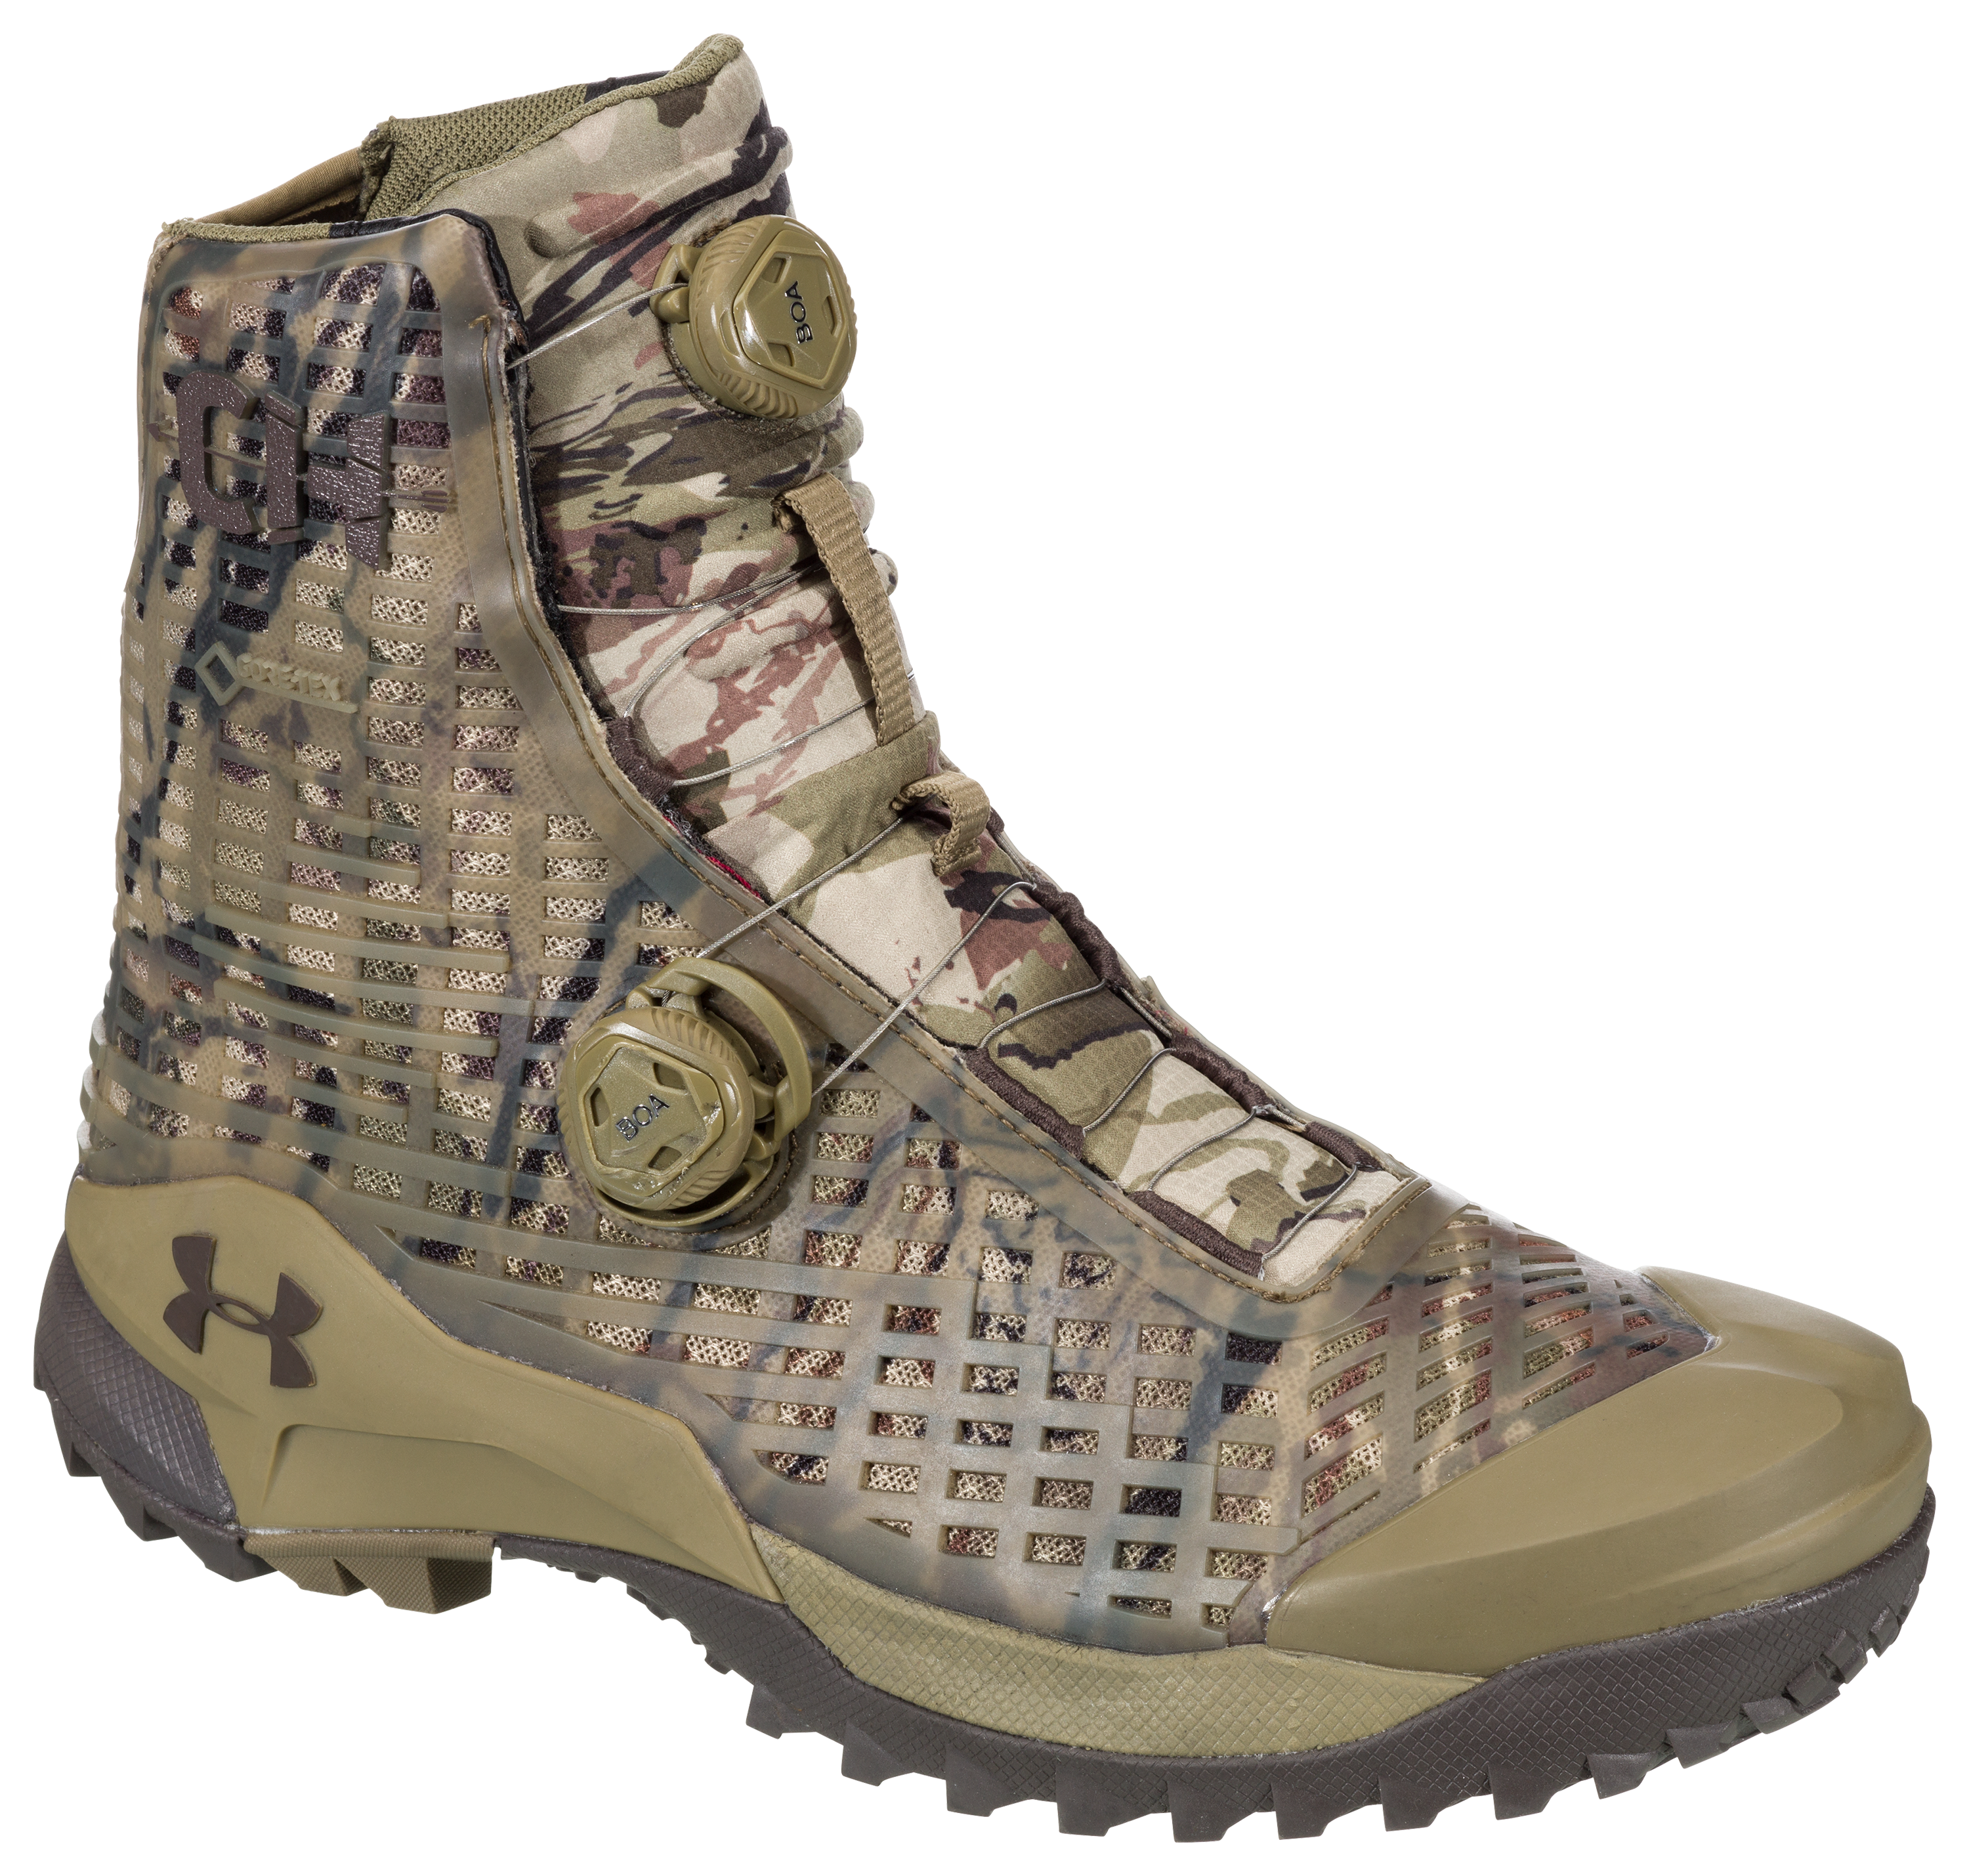 Under Armour CH1 GTX GORE-TEX Tactical Boots  for Men - Bayou Ridge Reaper Camo Barren - 13M